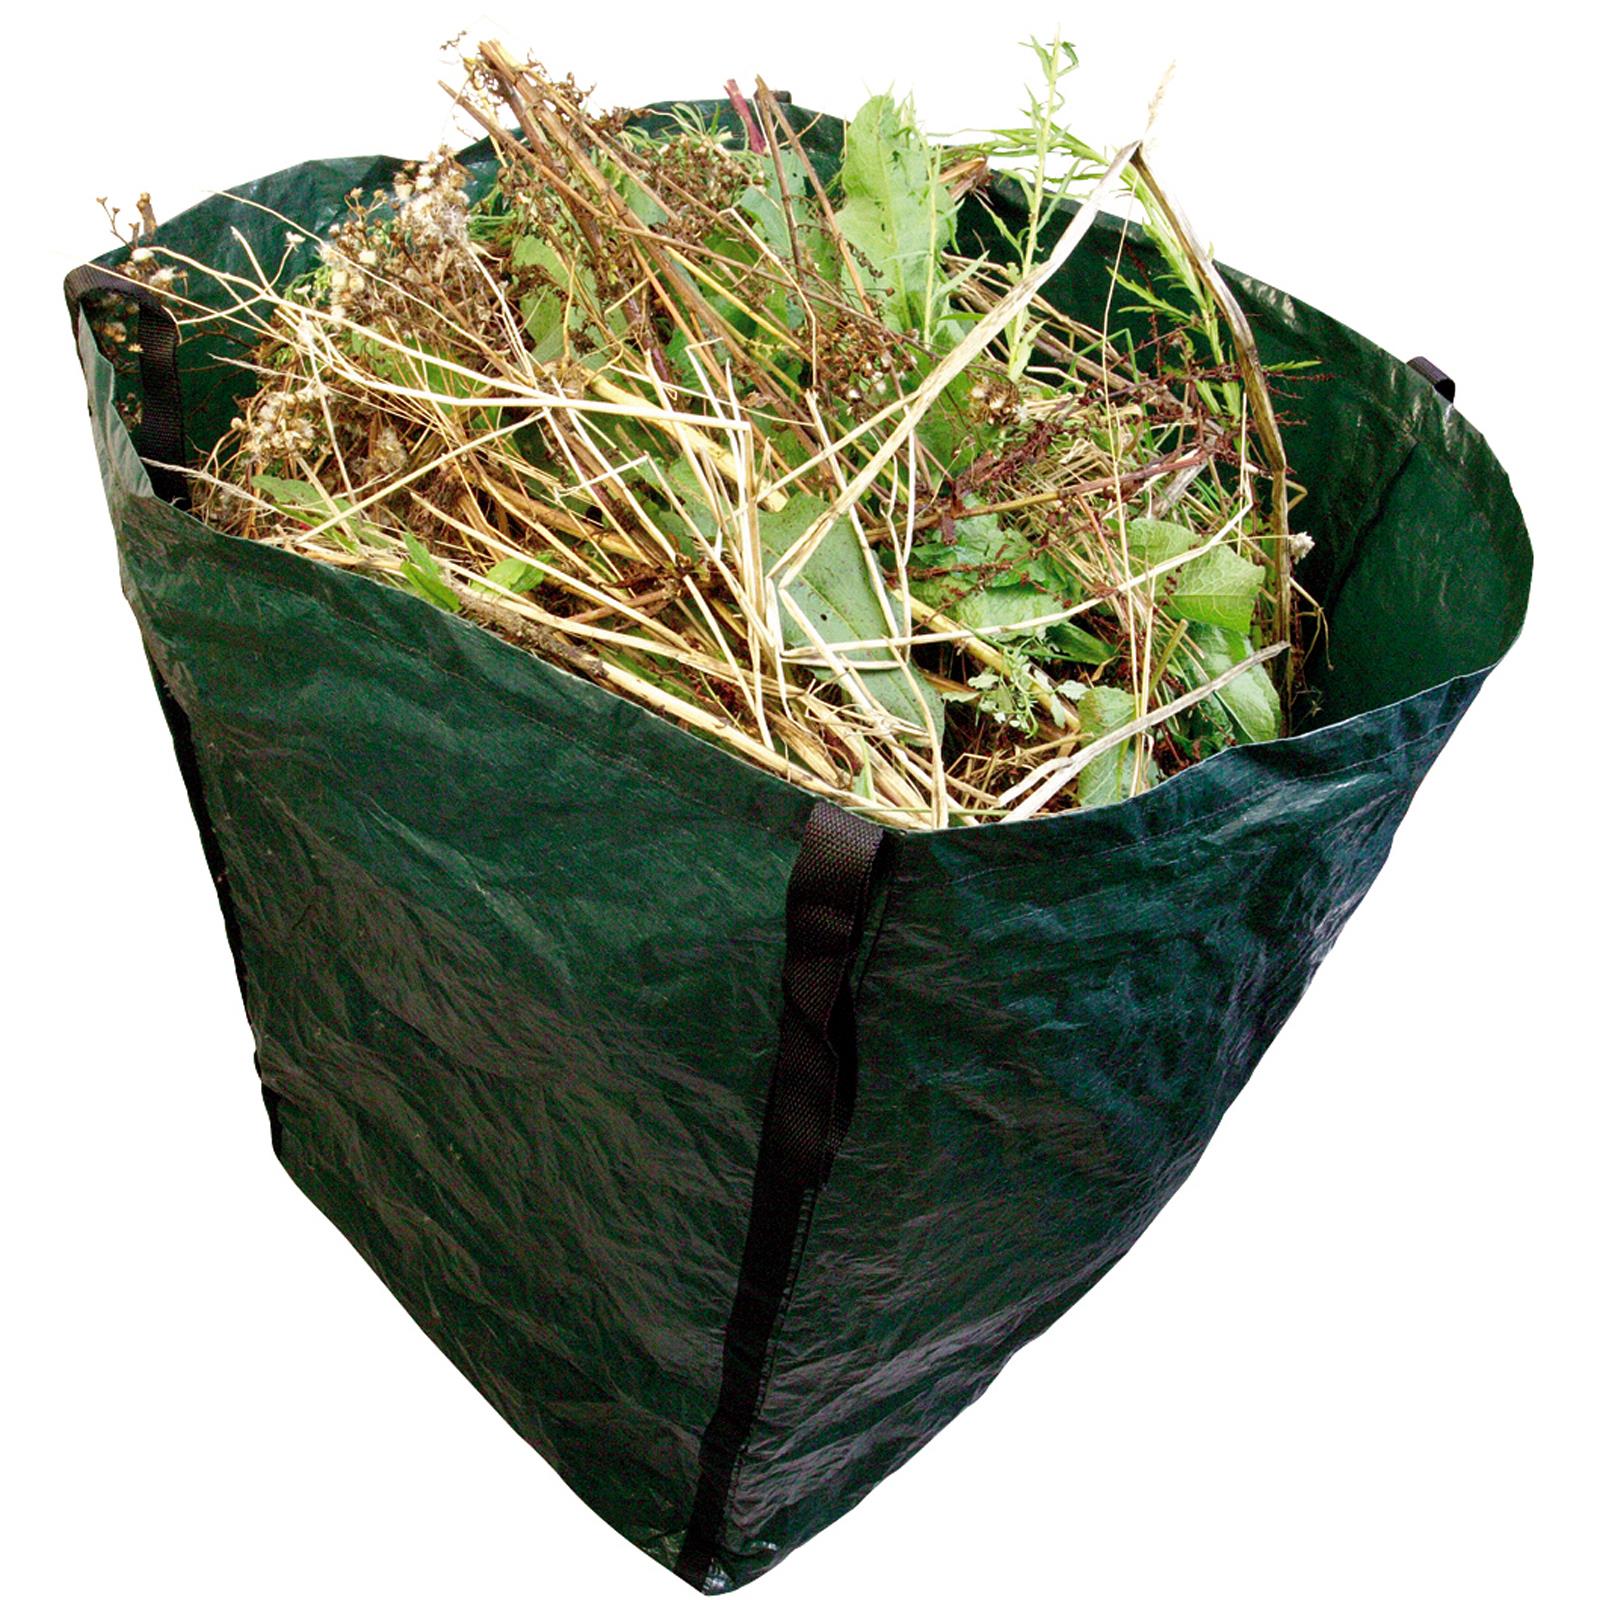 Silverline Heavy Duty Garden Refuse Bag Waste Rubbish Sack 360 Litre